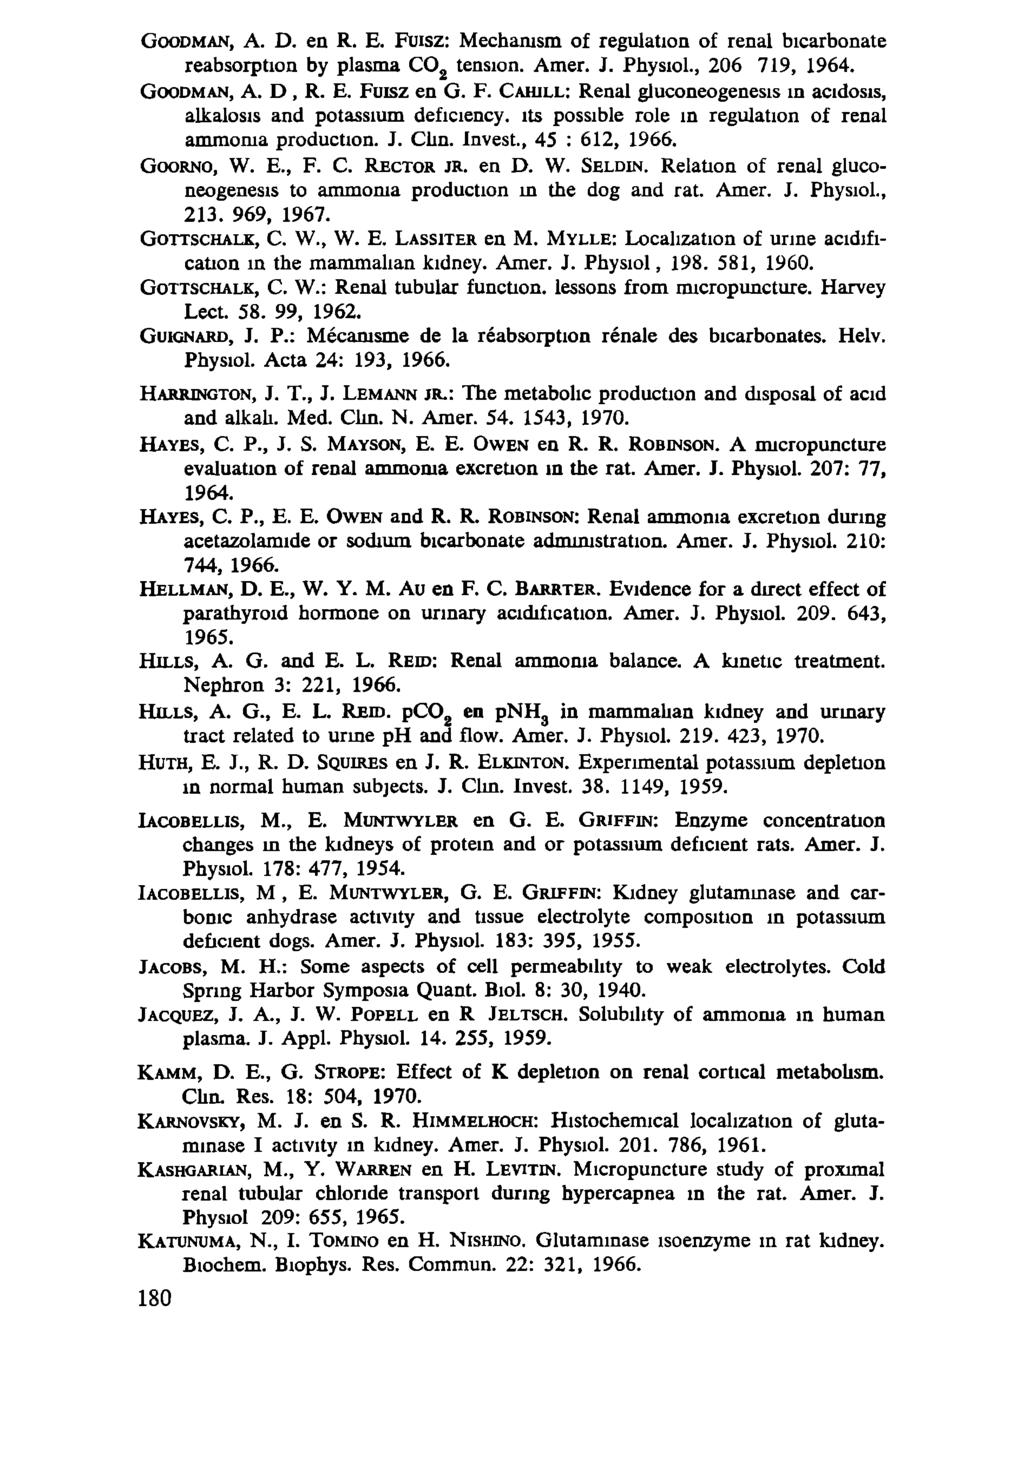 GOODMAN, A. D. en R. E. Fuisz: Mechanism of regulation of renal bicarbonate reabsorption by plasma C0 2 tension. Amer. J. Physiol., 206 719, 1964. GOODMAN, A. D, R. E. FUISZ en G. F. CAHILL: Renal gluconeogenesis in acidosis, alkalosis and potassium deficiency, its possible role in regulation of renal ammonia production.